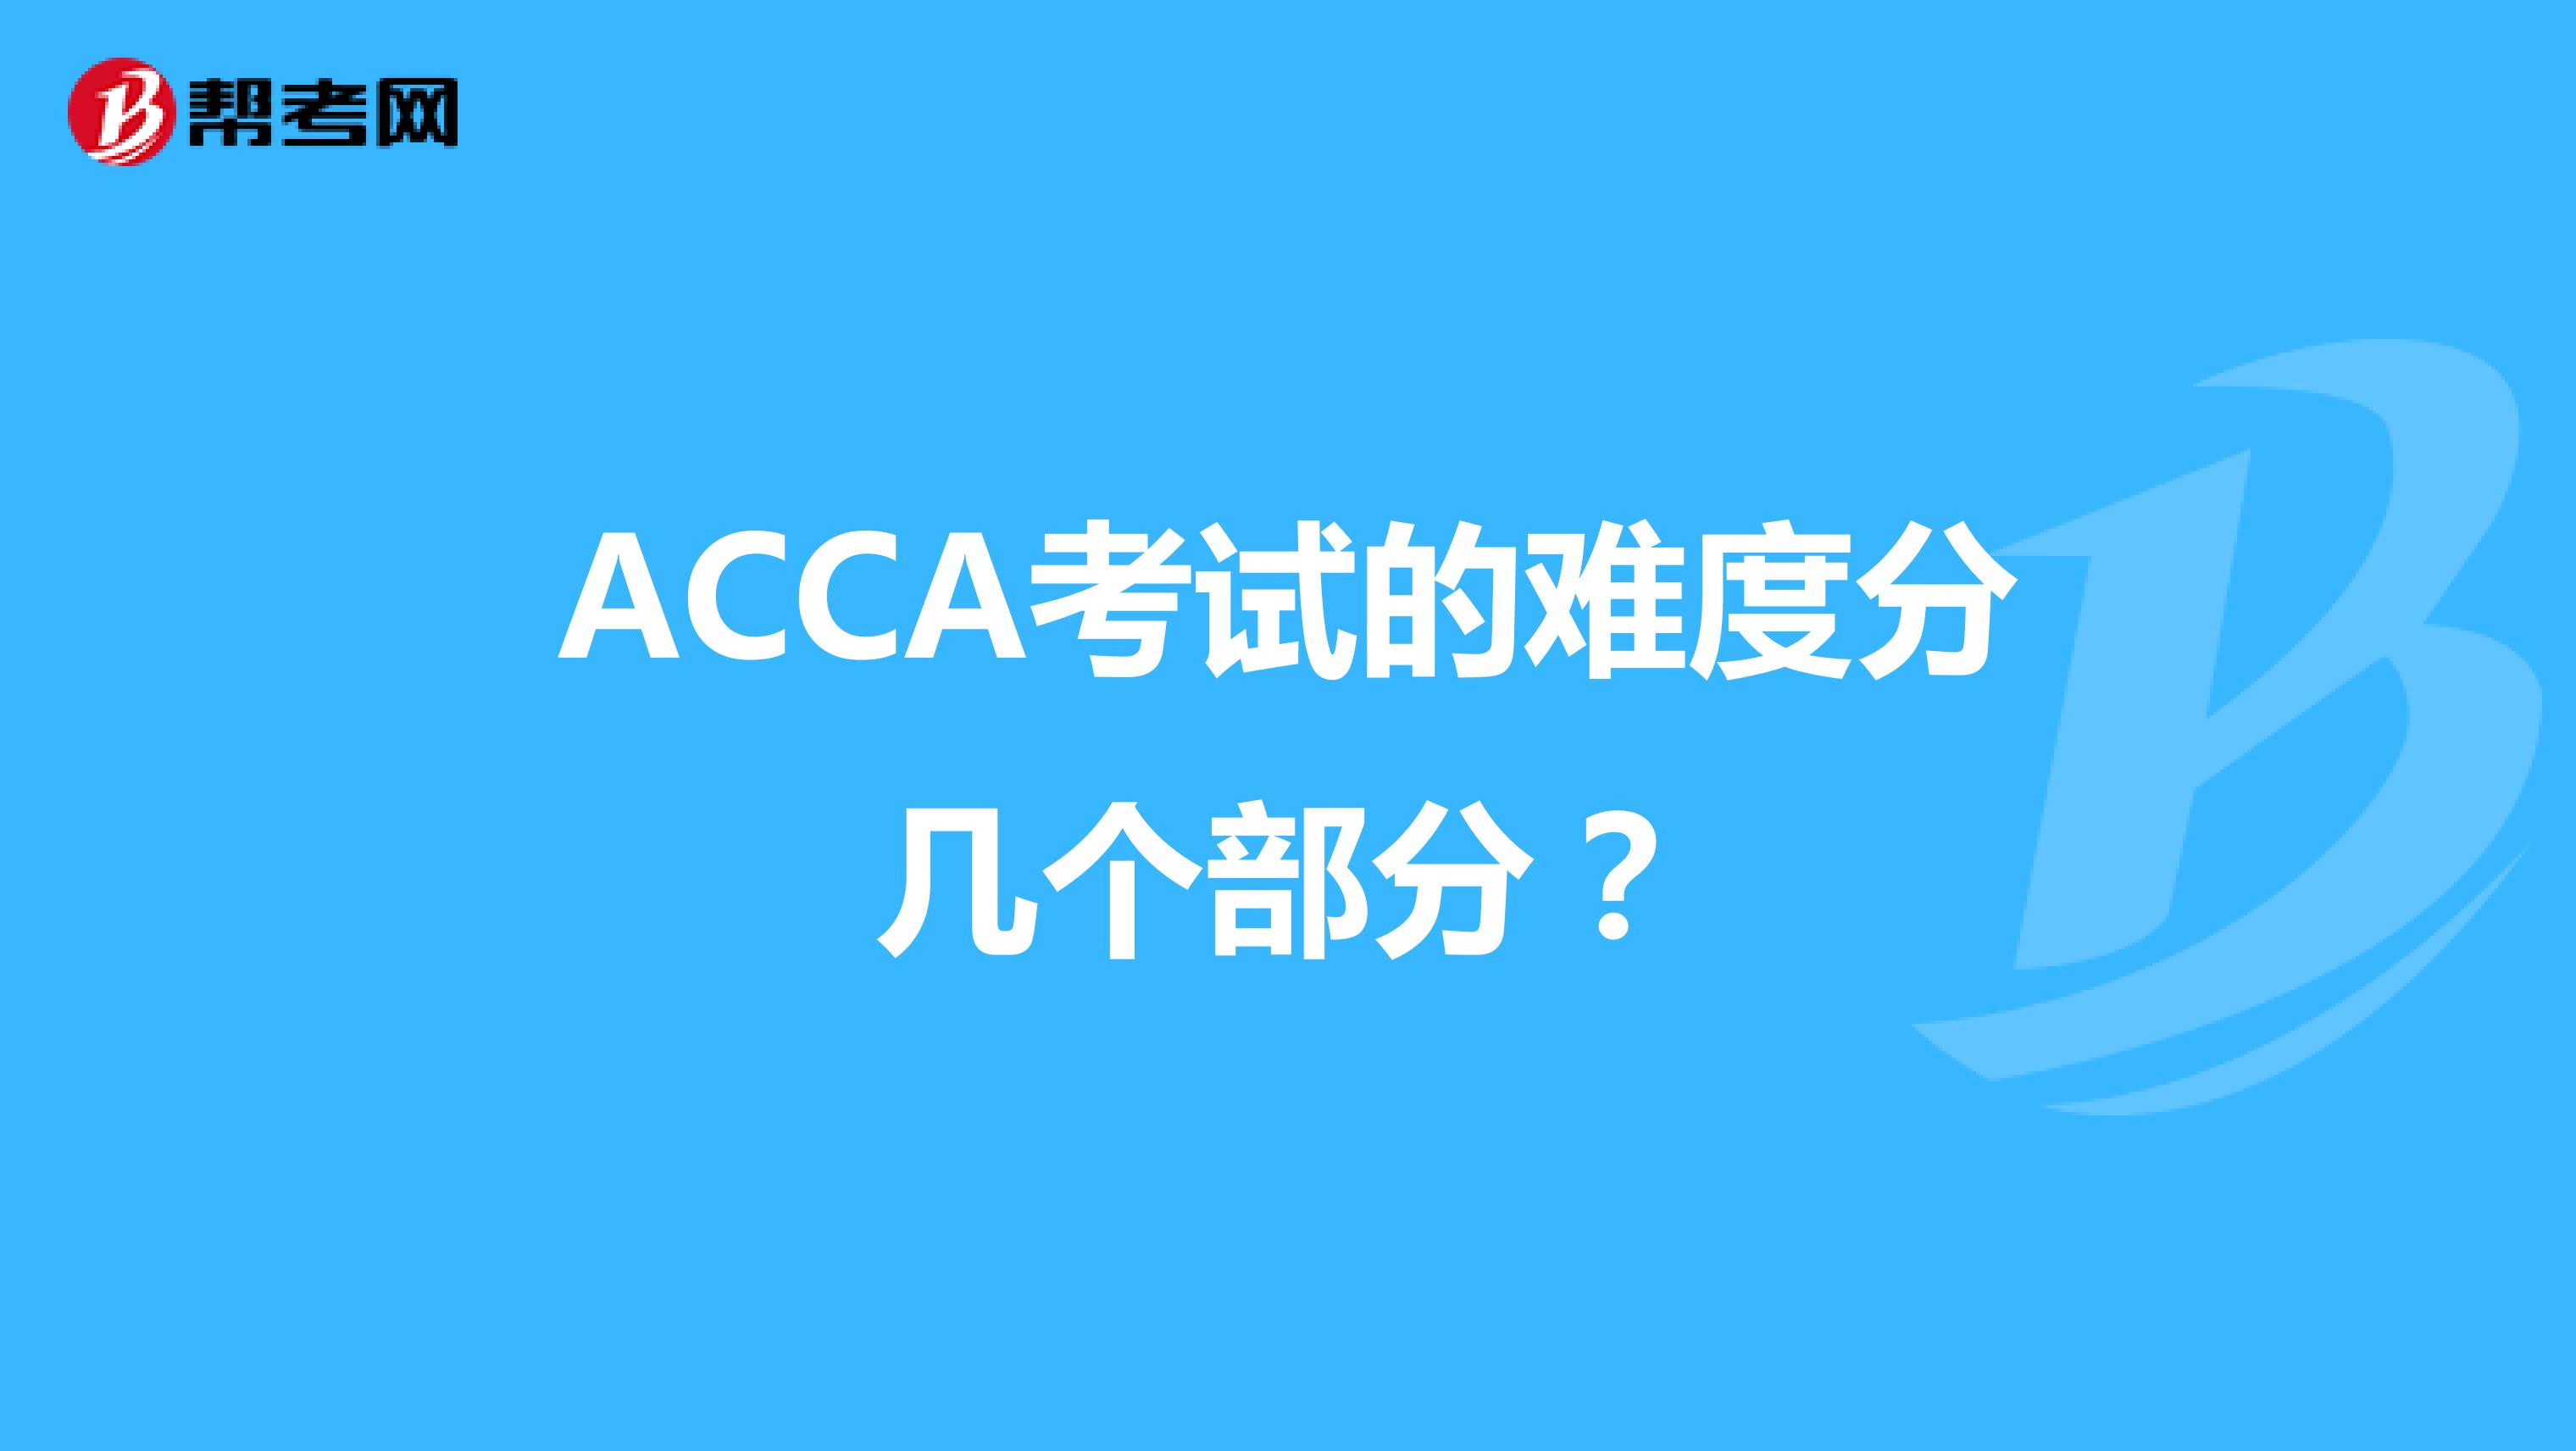 ACCA考试的难度分几个部分？